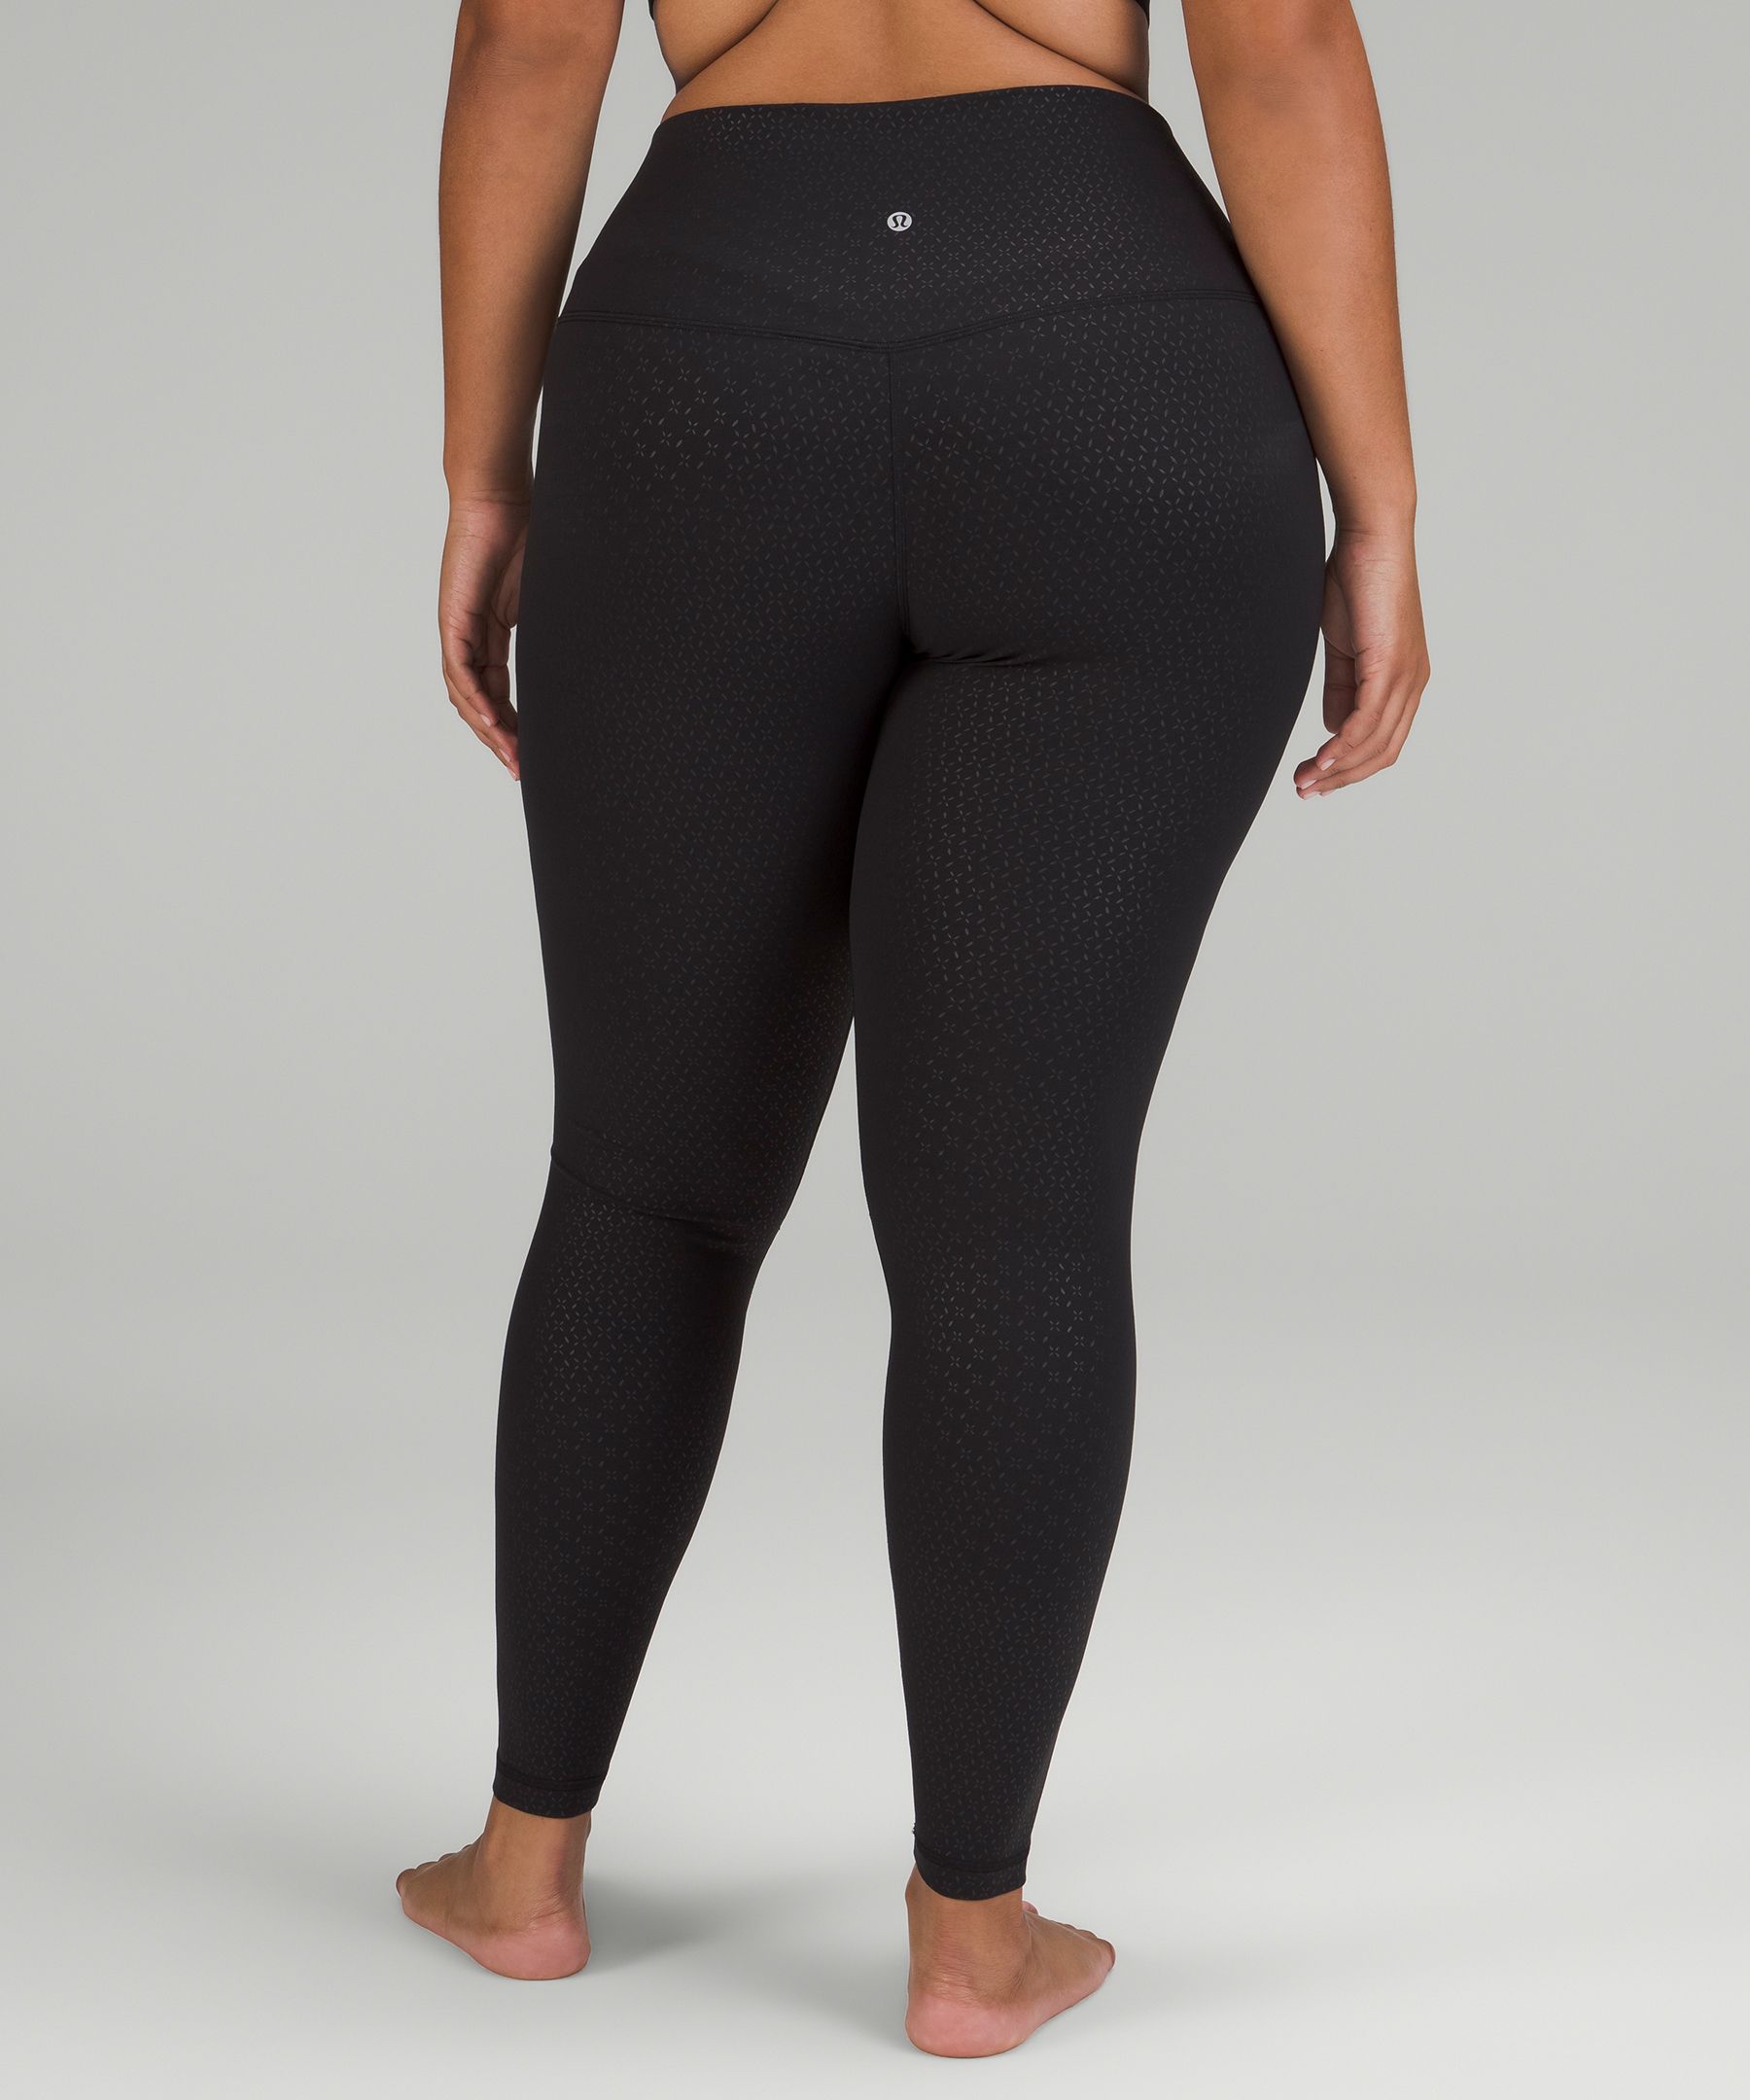 Lululemon black leggings size 2 or 4 see measurements - $33 - From Michaela